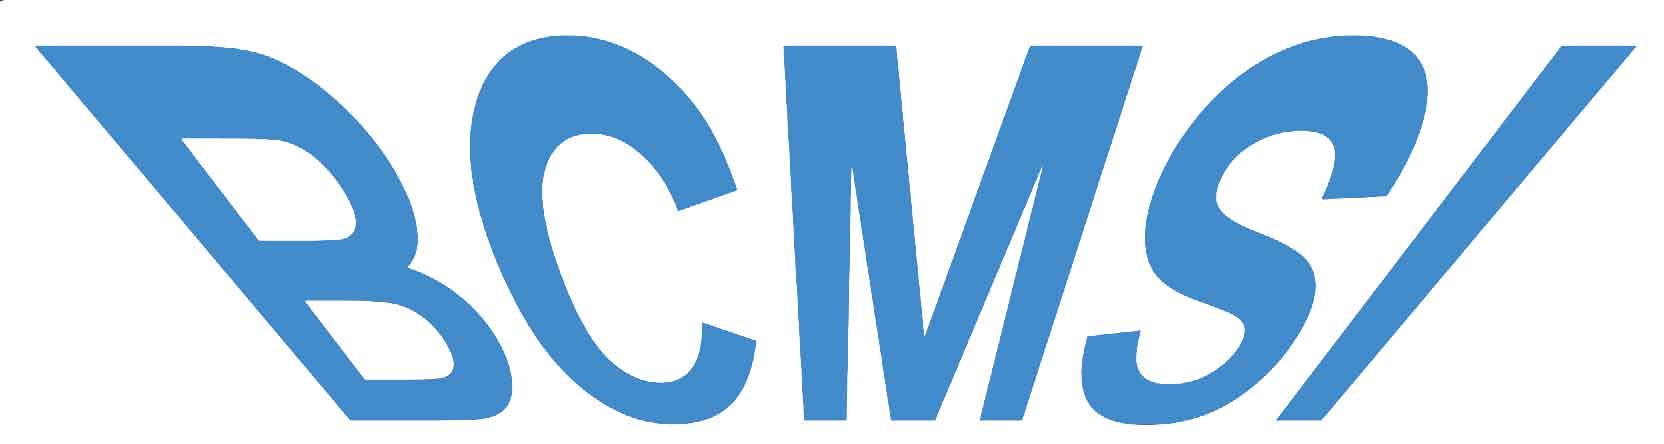 Blue Collar Manpower Services Logo